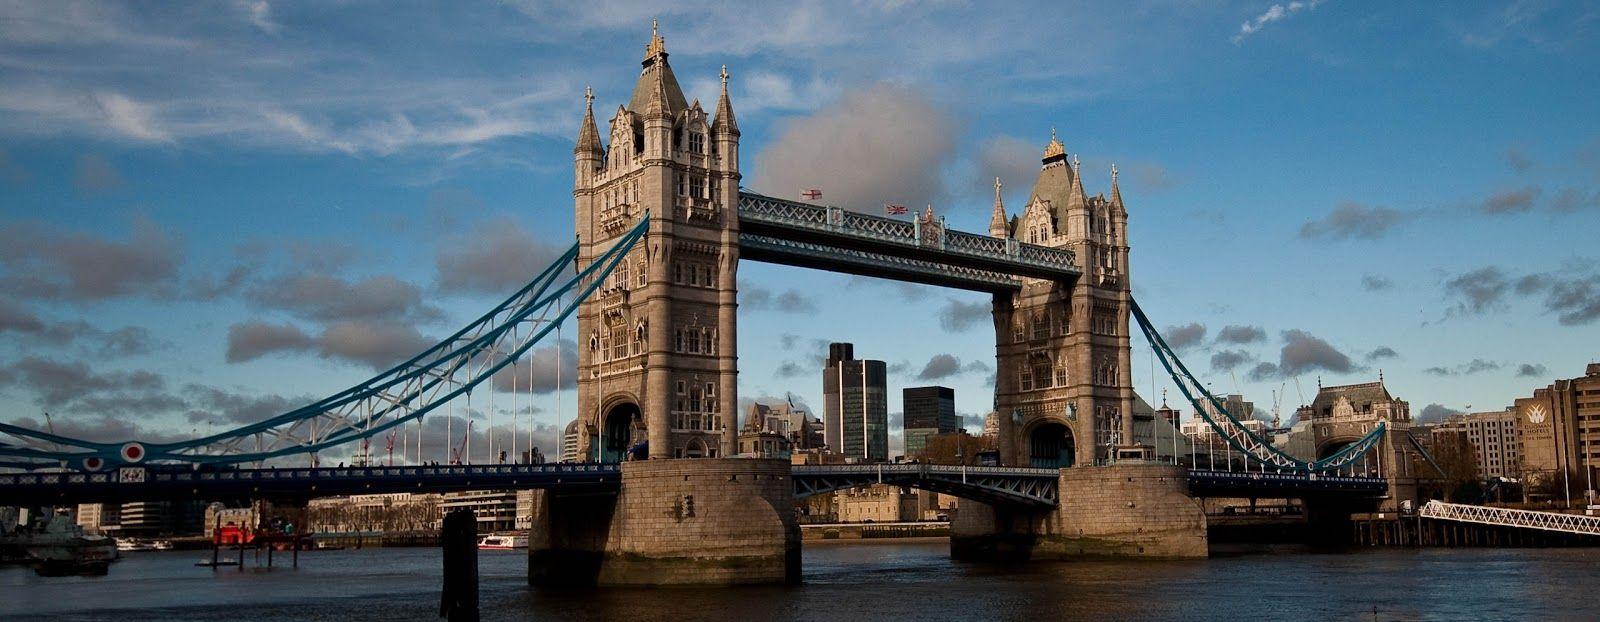 Tower Bridge – London Icon, Suspension Bridge, River Thames